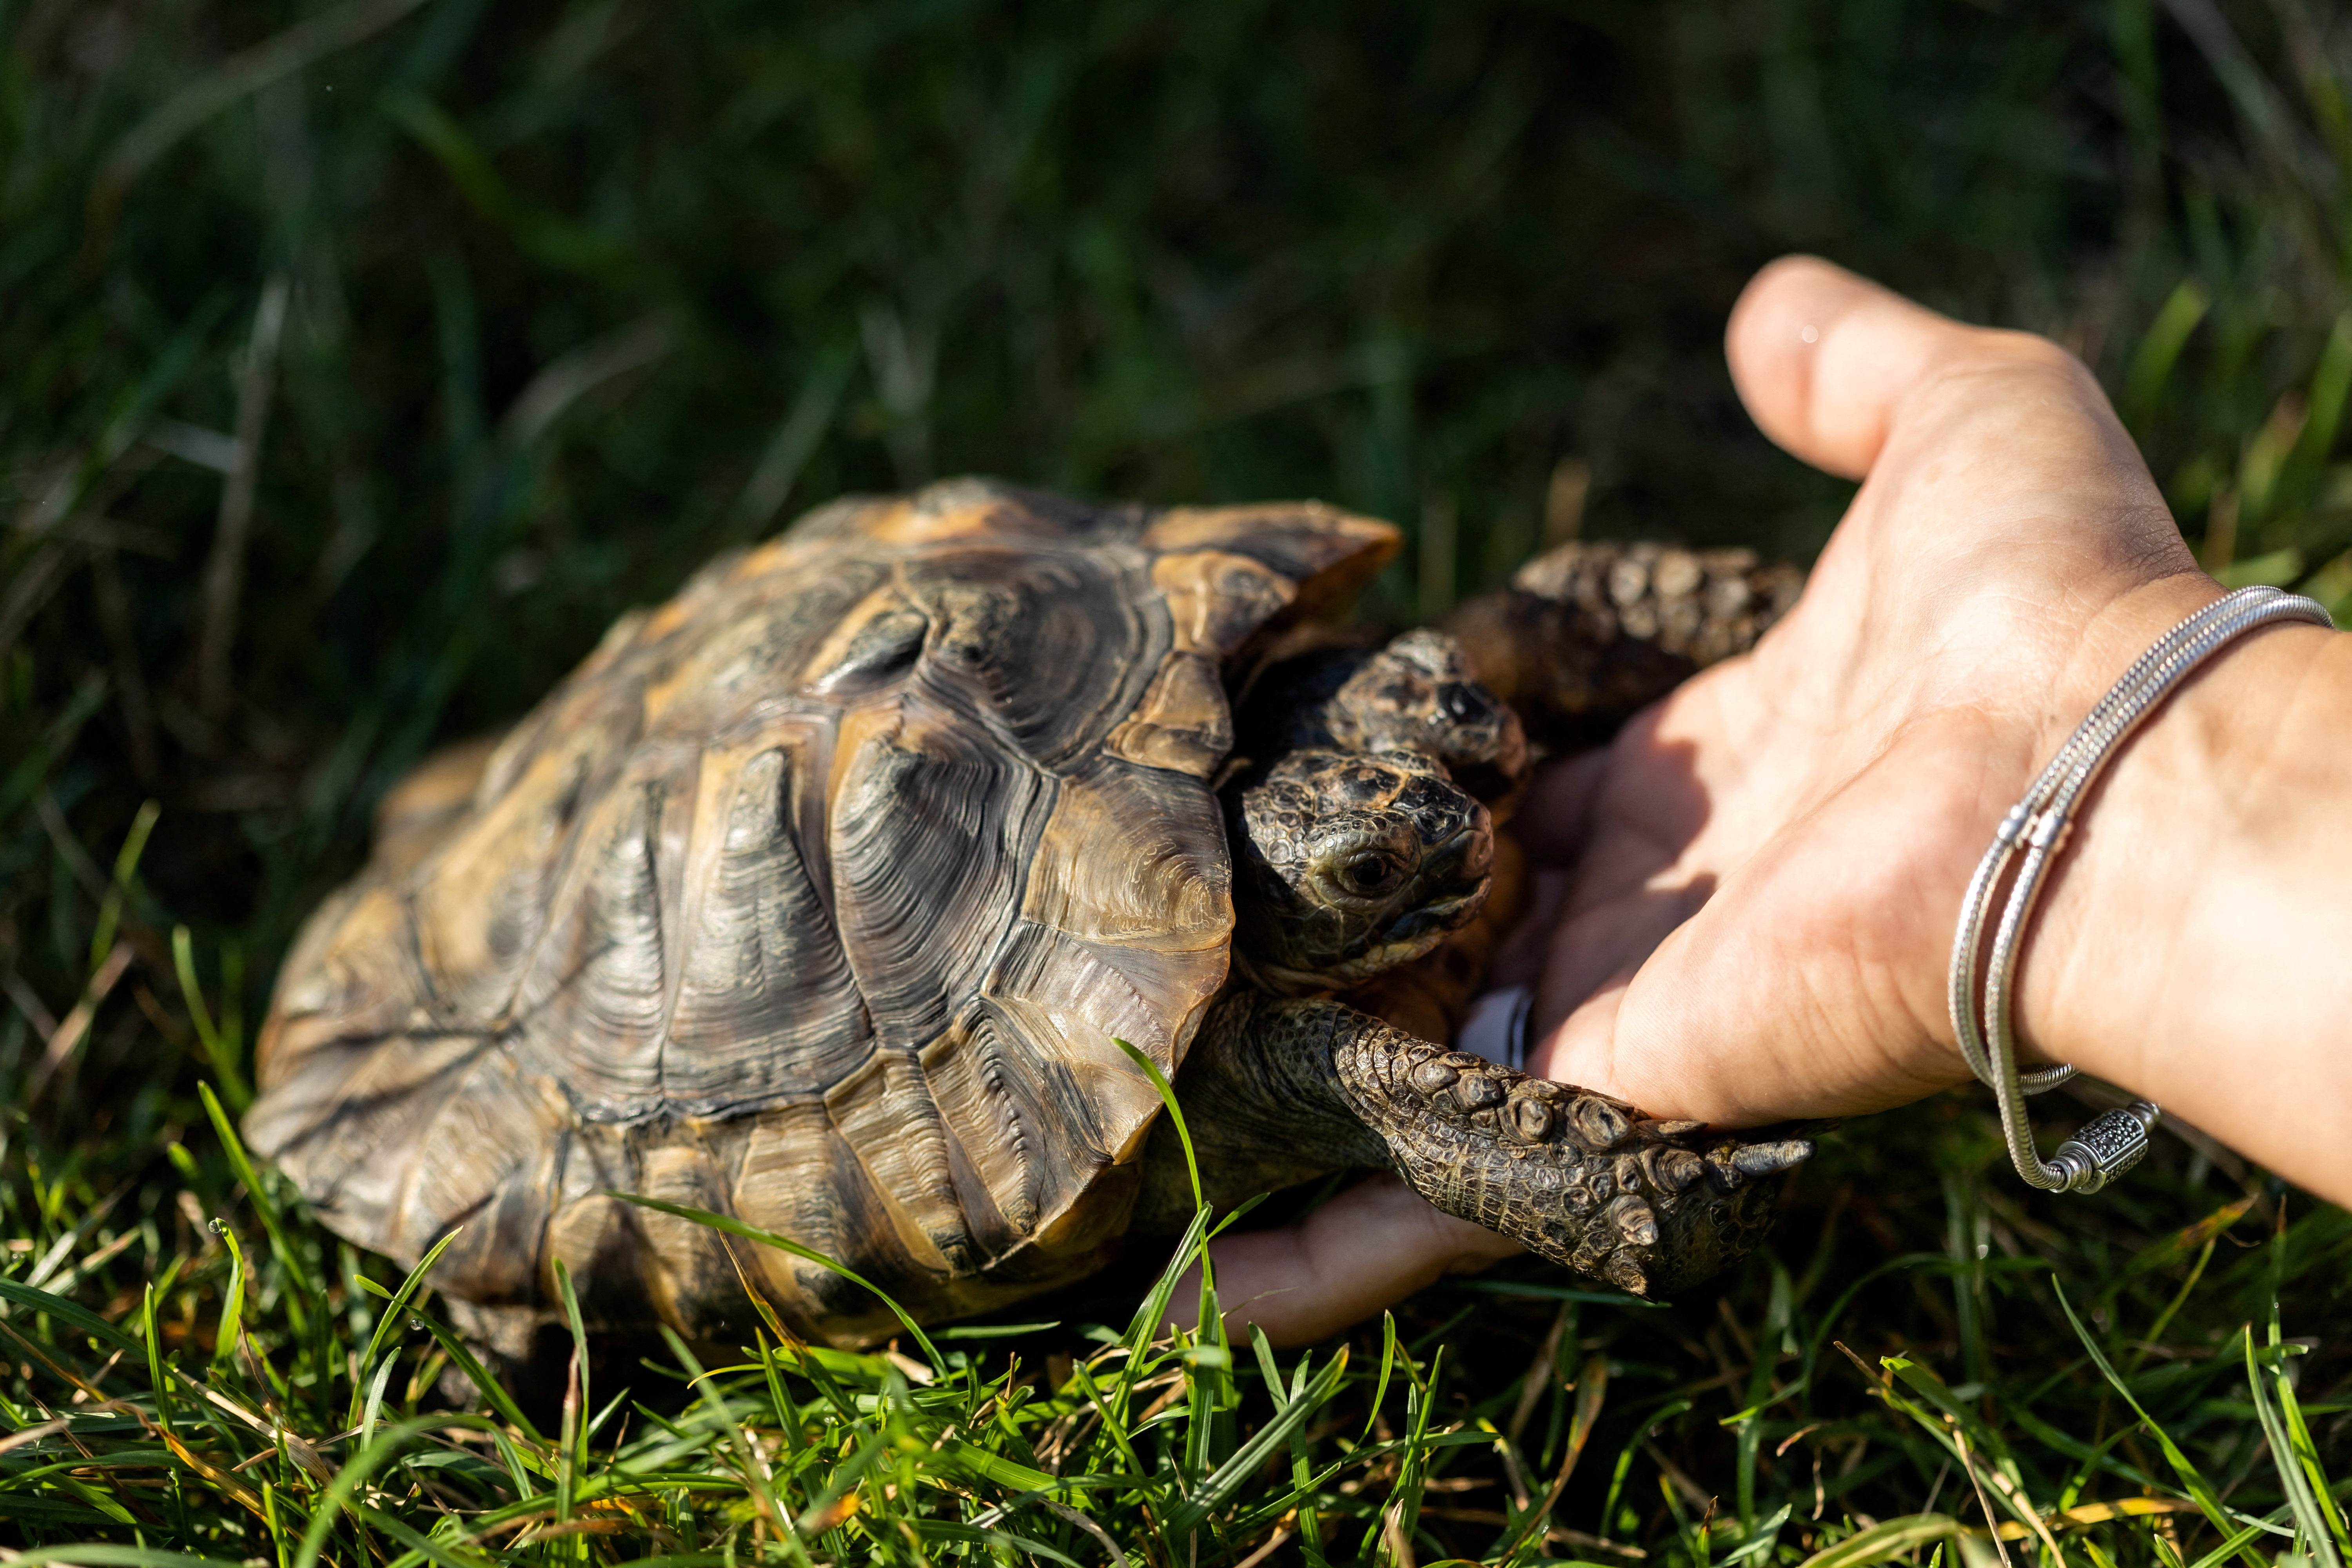 Two-headed tortoise Janus celebrates his 25th birthday in Geneva